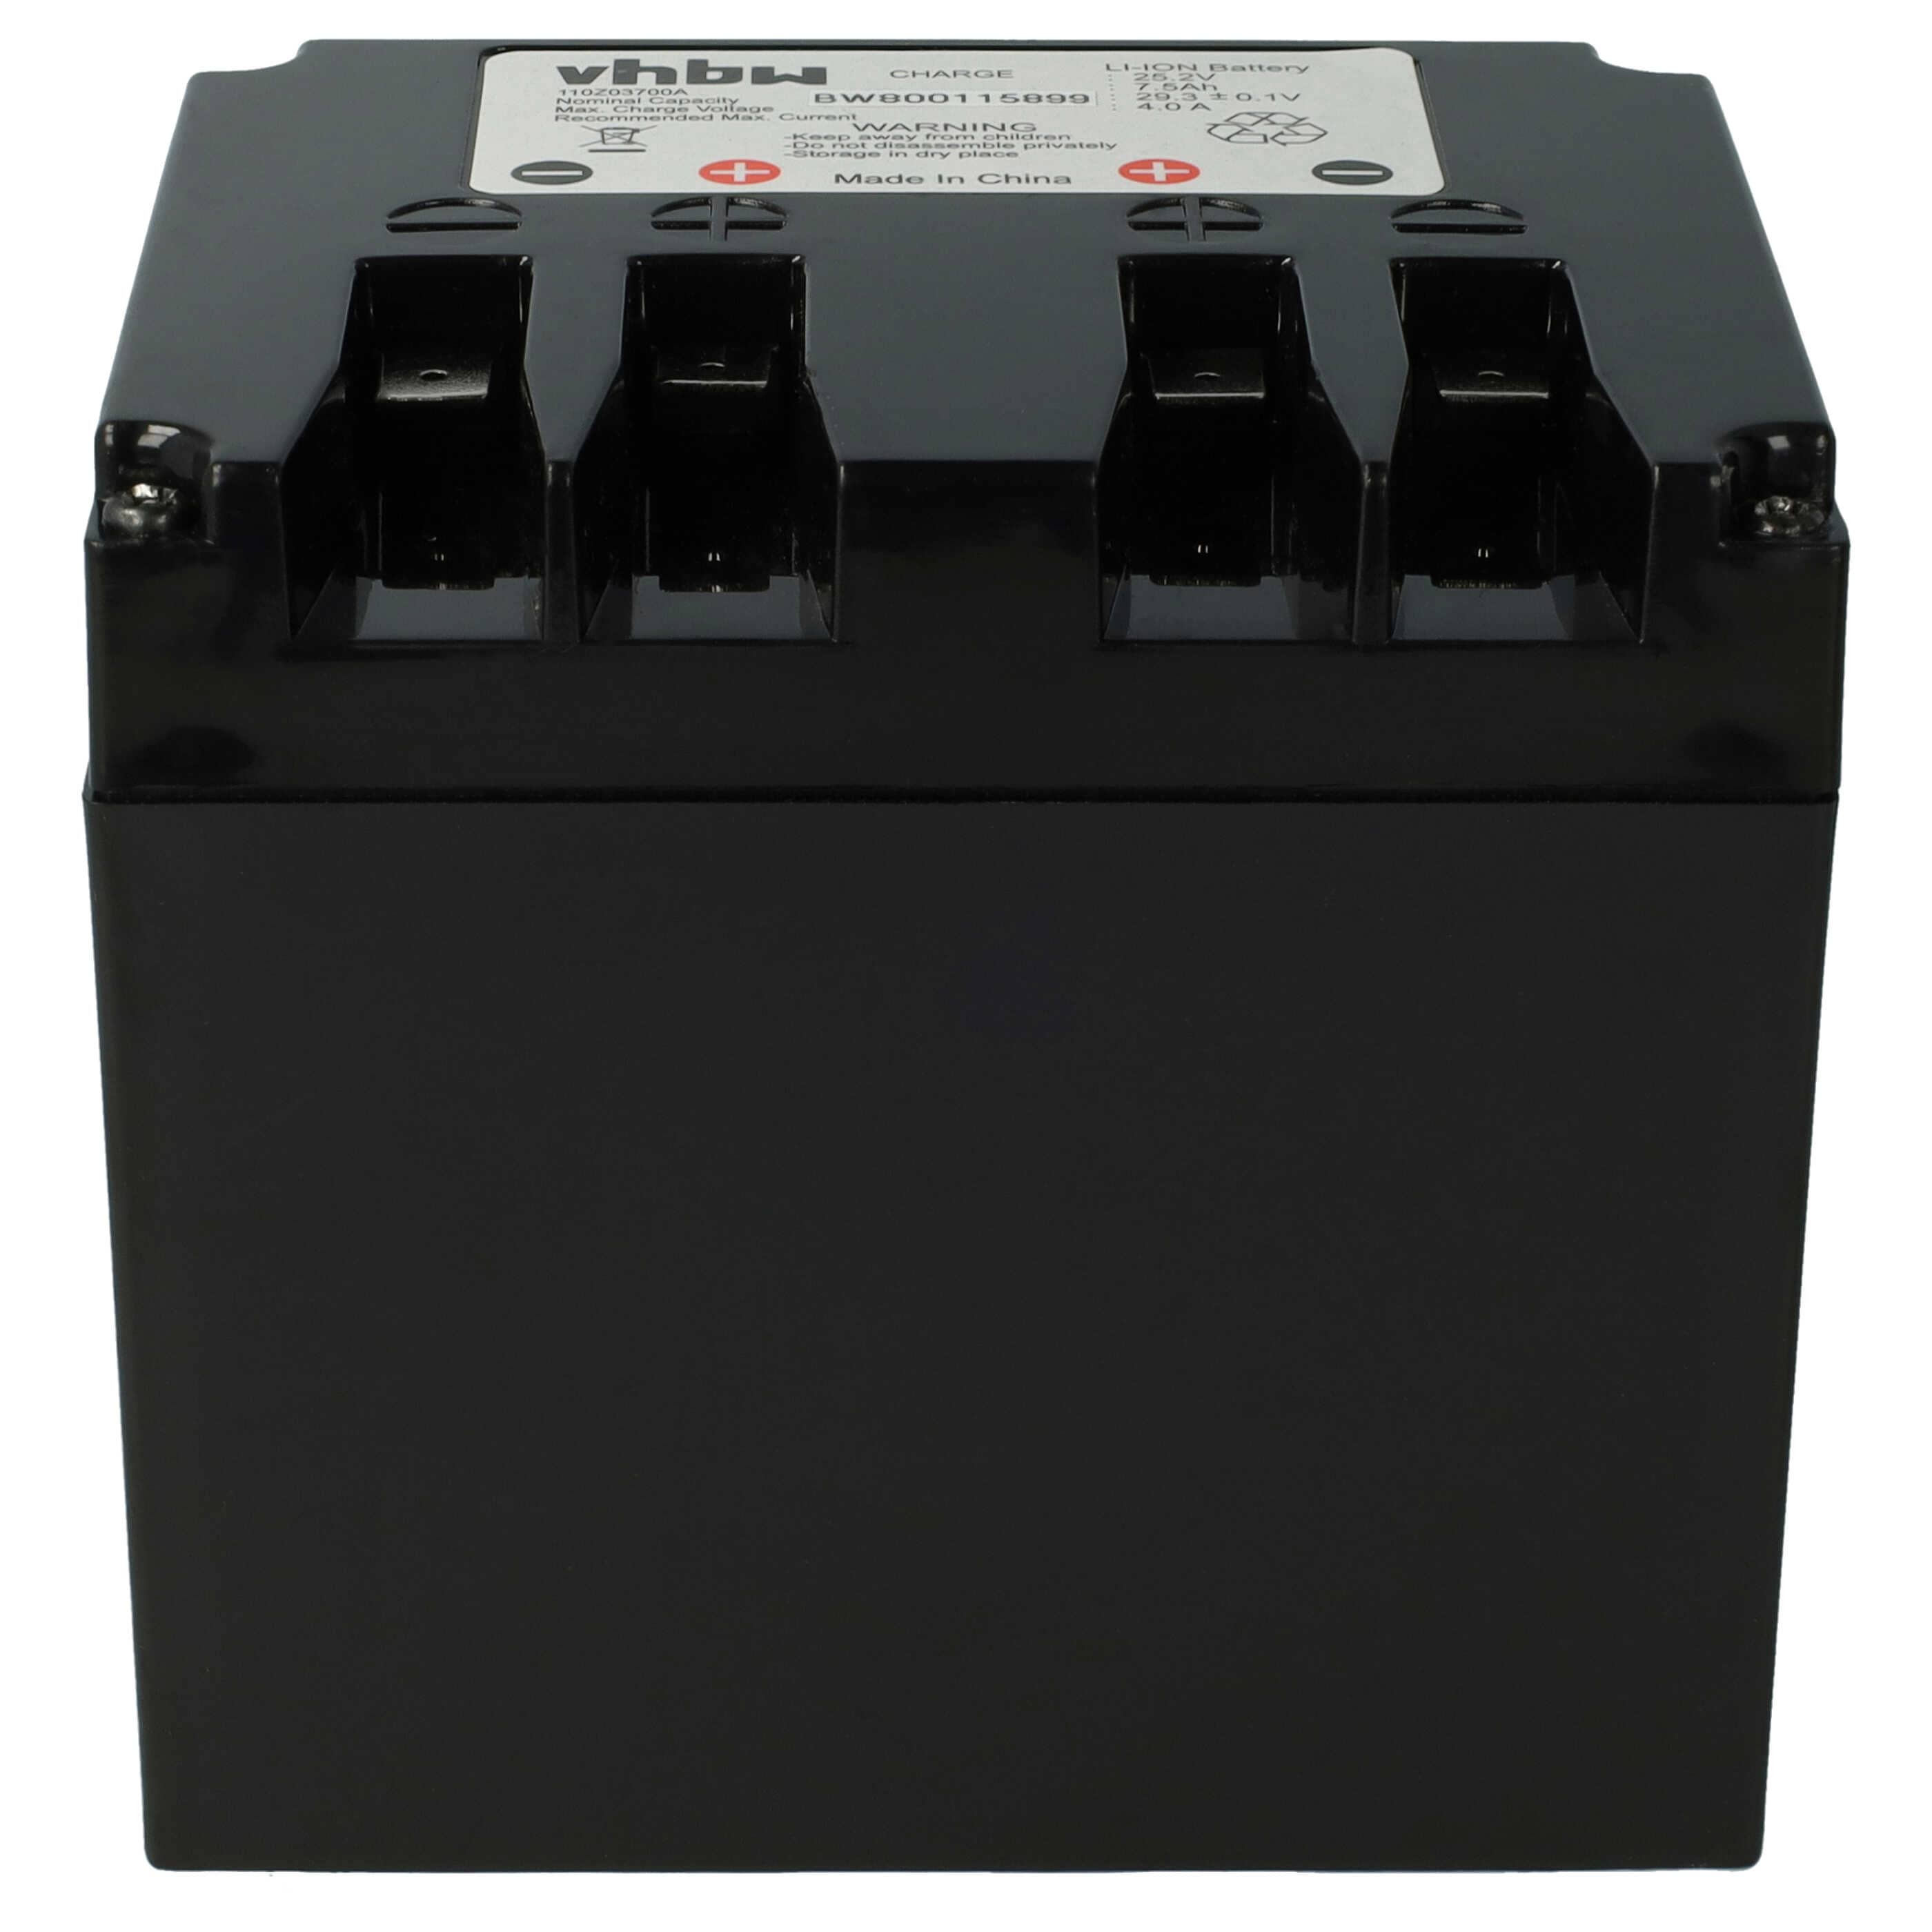 Lawnmower Battery Replacement for Zucchetti type B - 7500mAh 25.2V Li-Ion